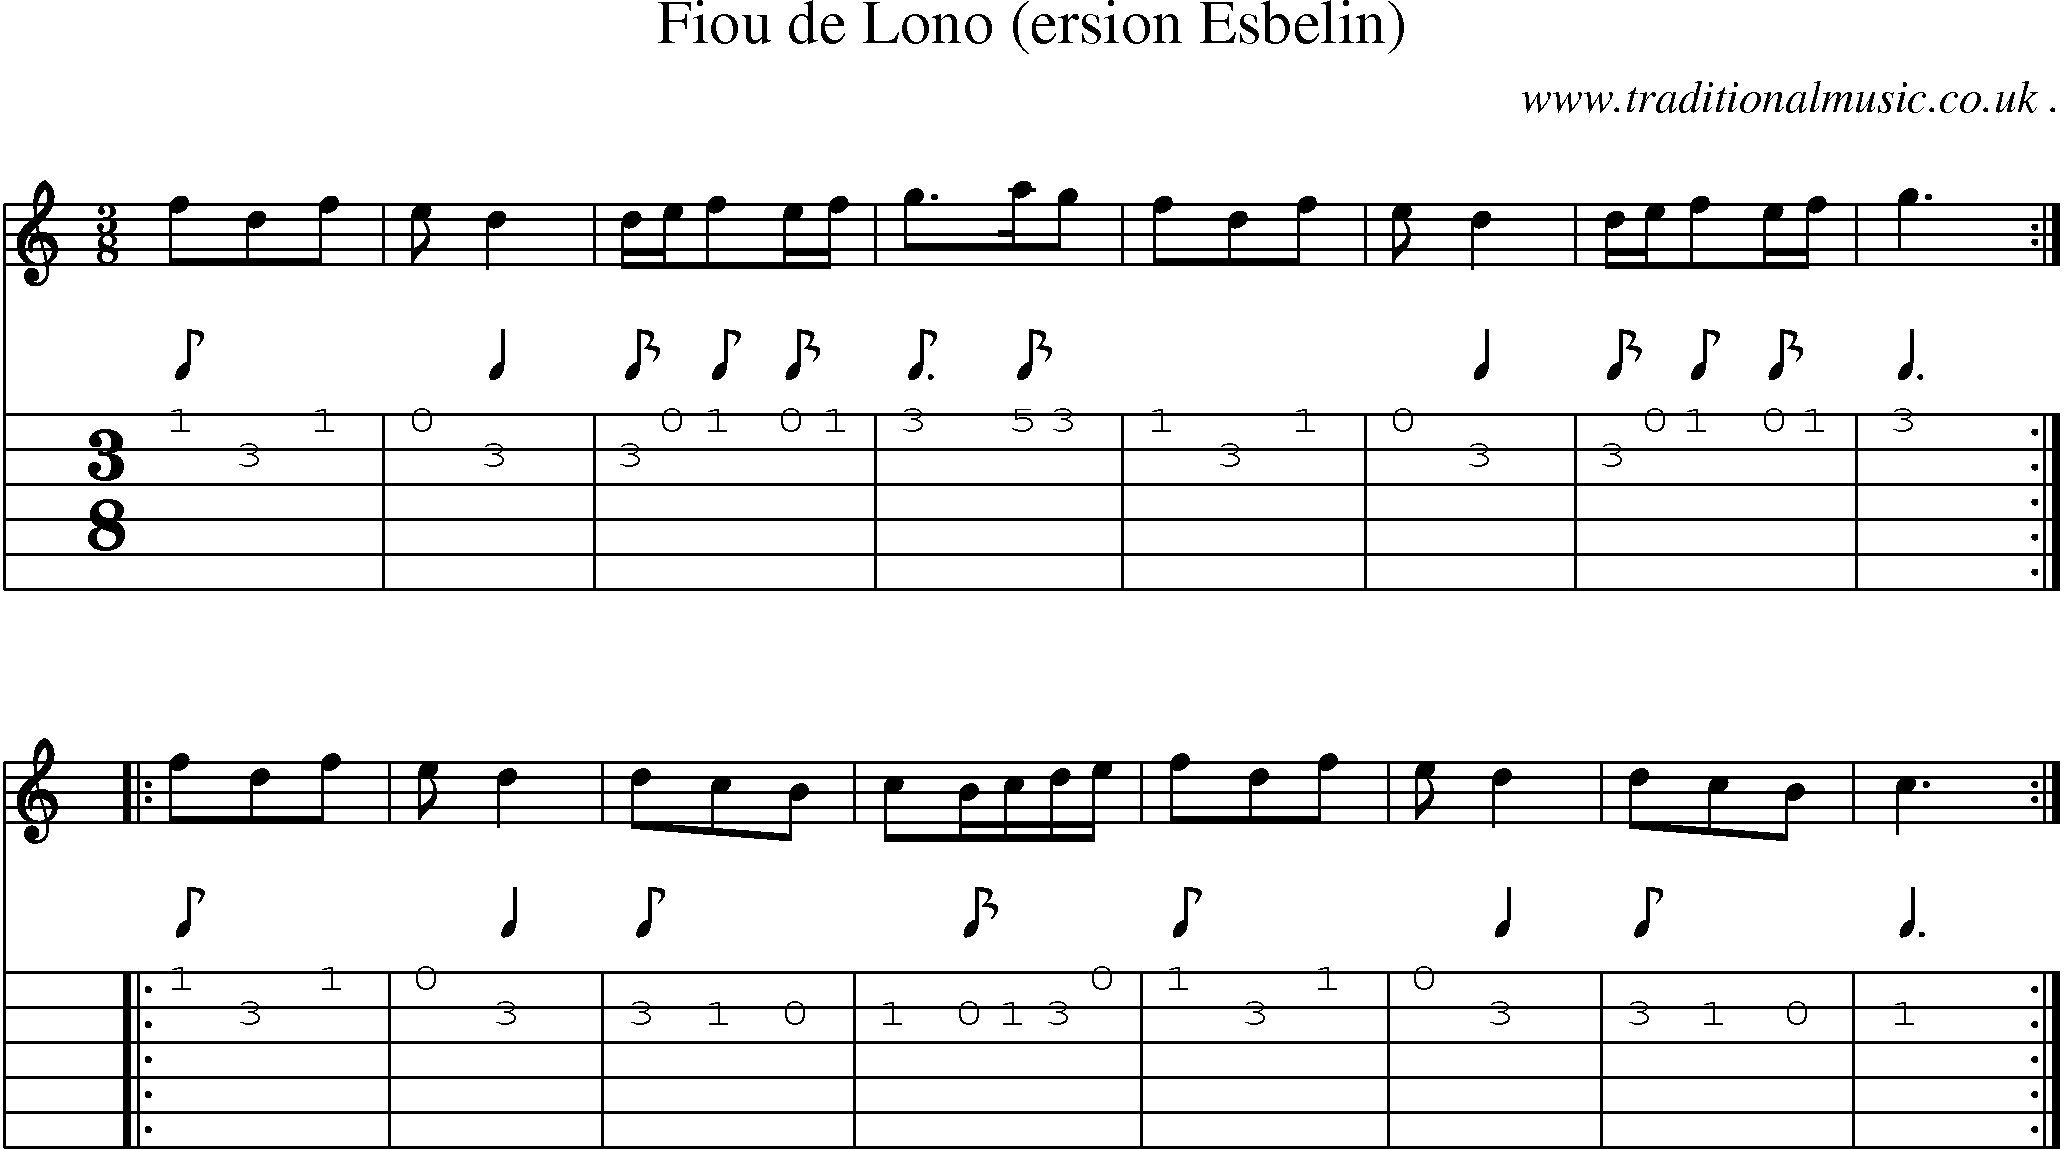 Sheet-Music and Guitar Tabs for Fiou De Lono (ersion Esbelin)